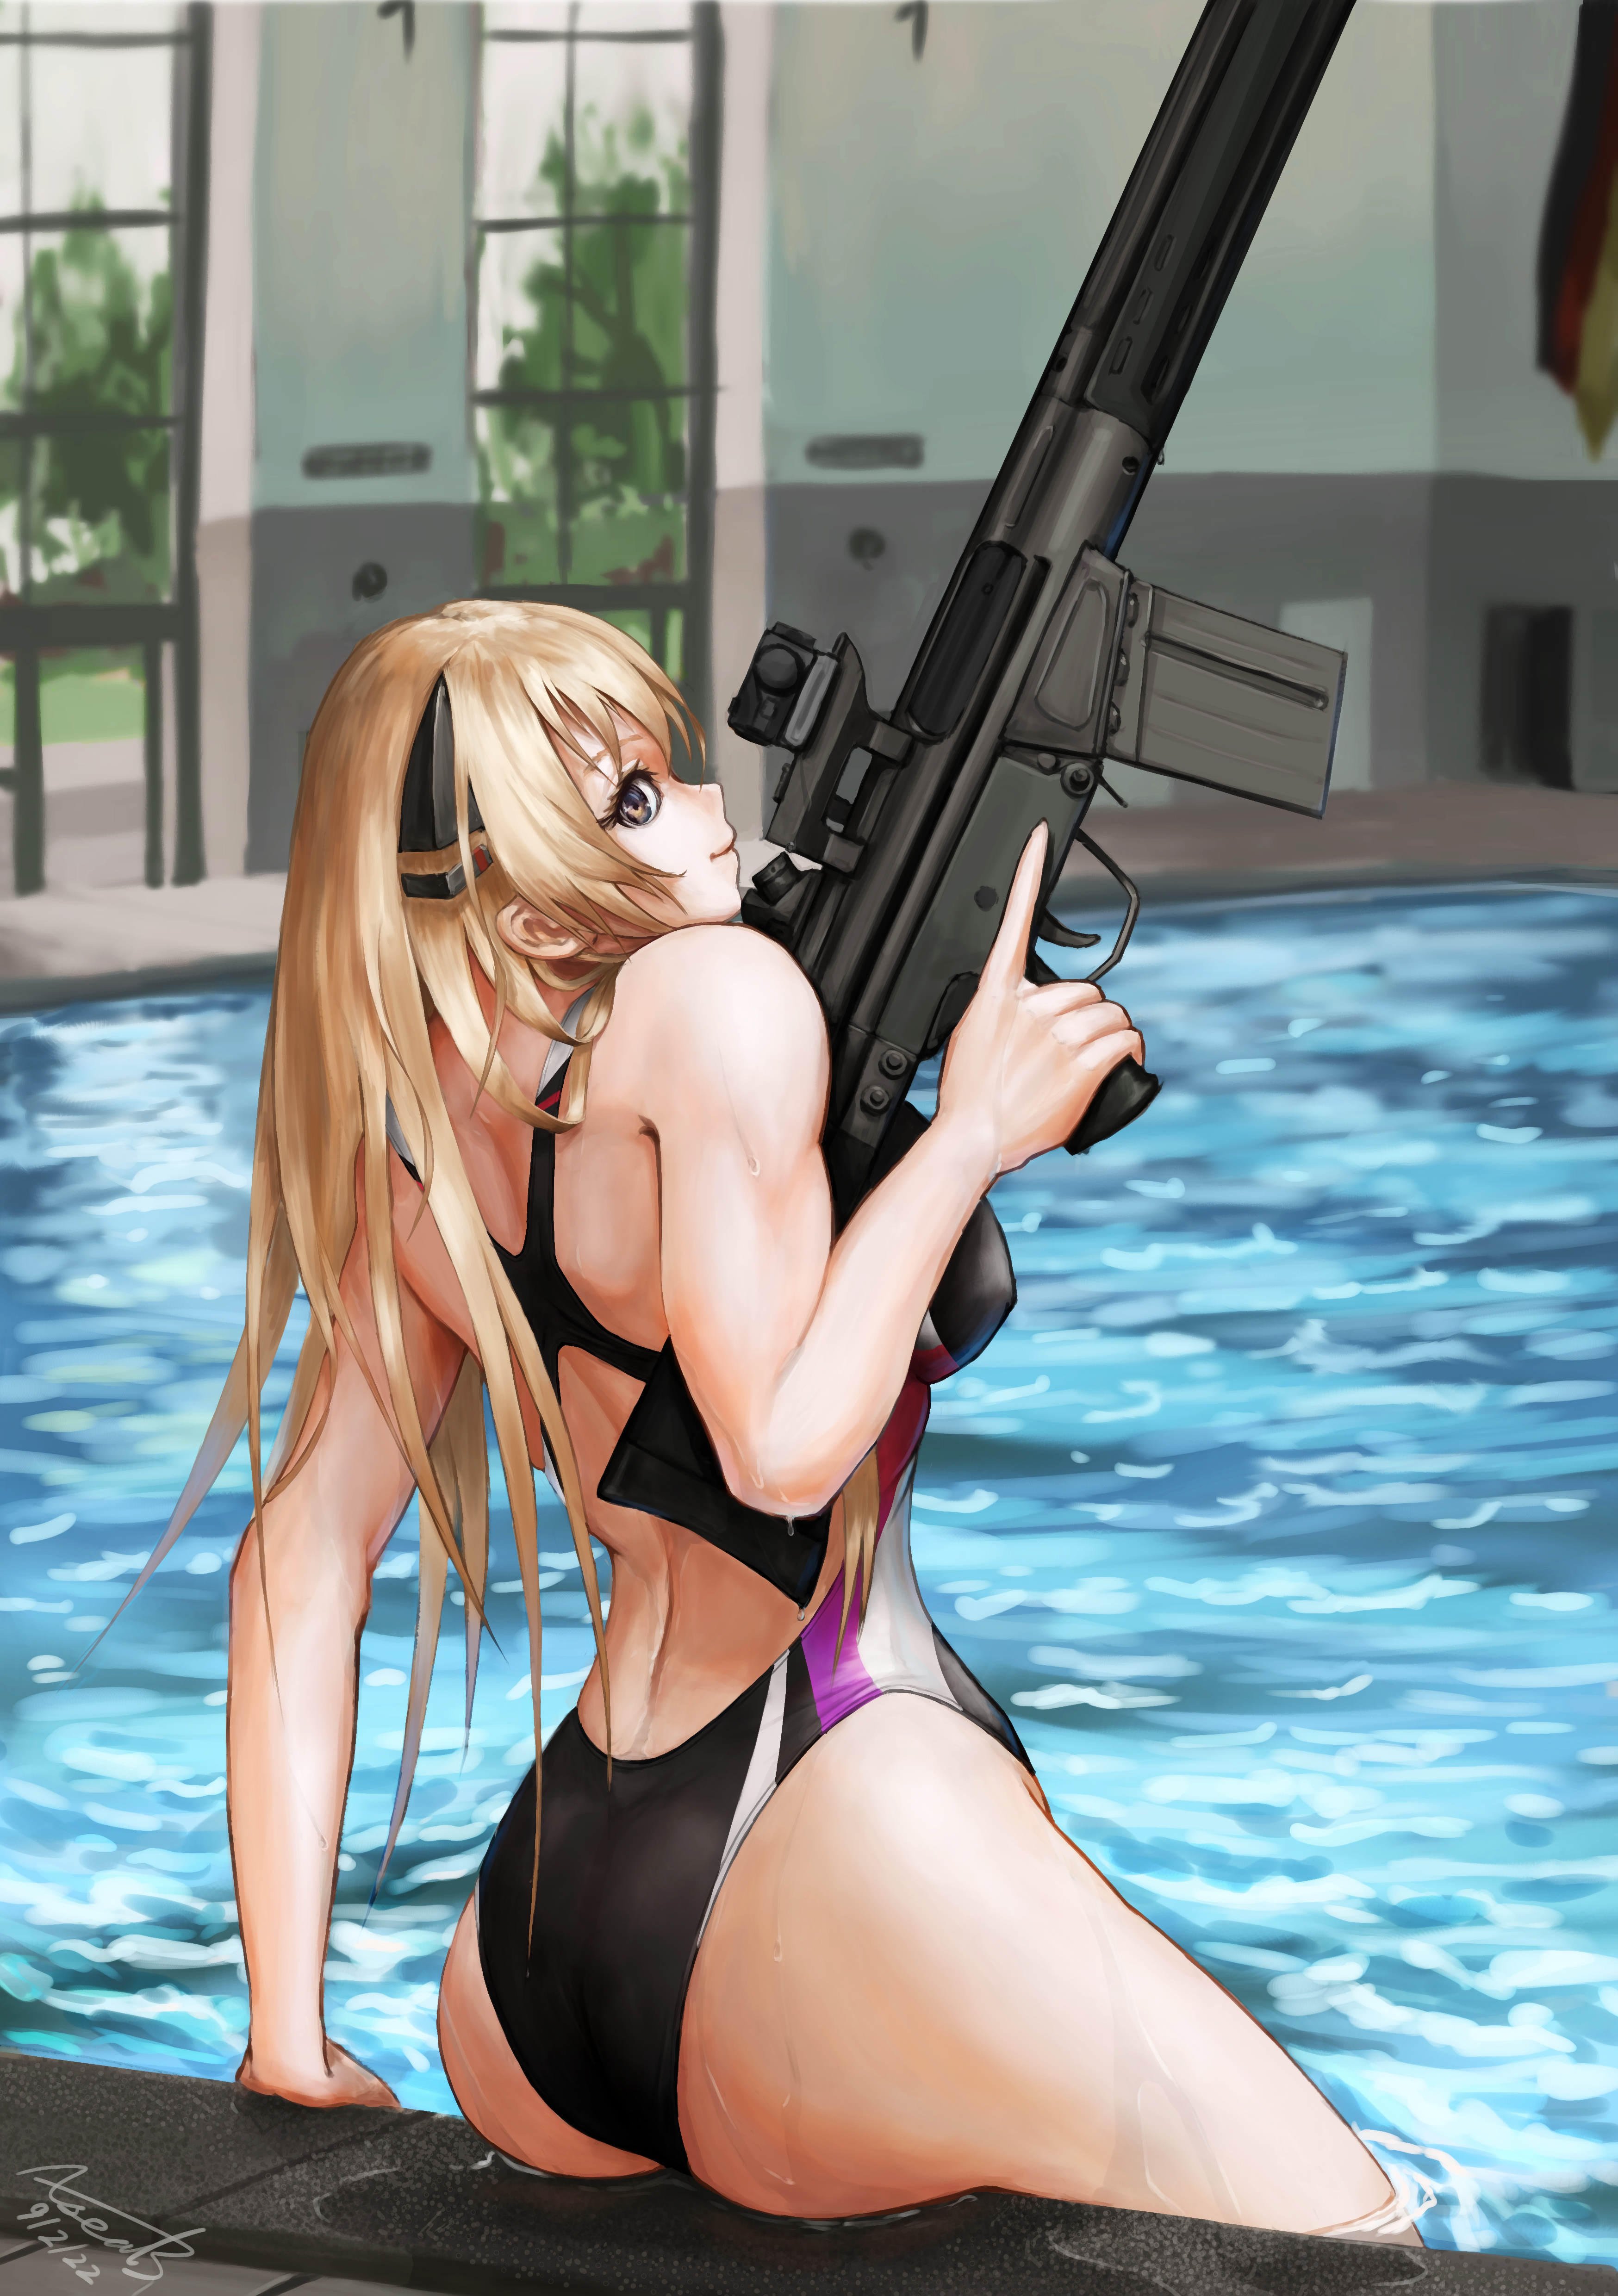 Anime 3496x4961 one-piece swimsuit Girls Frontline anime girls gun girls with guns ass water swimming pool blonde wet body G3(Girls Frontline) wet portrait display